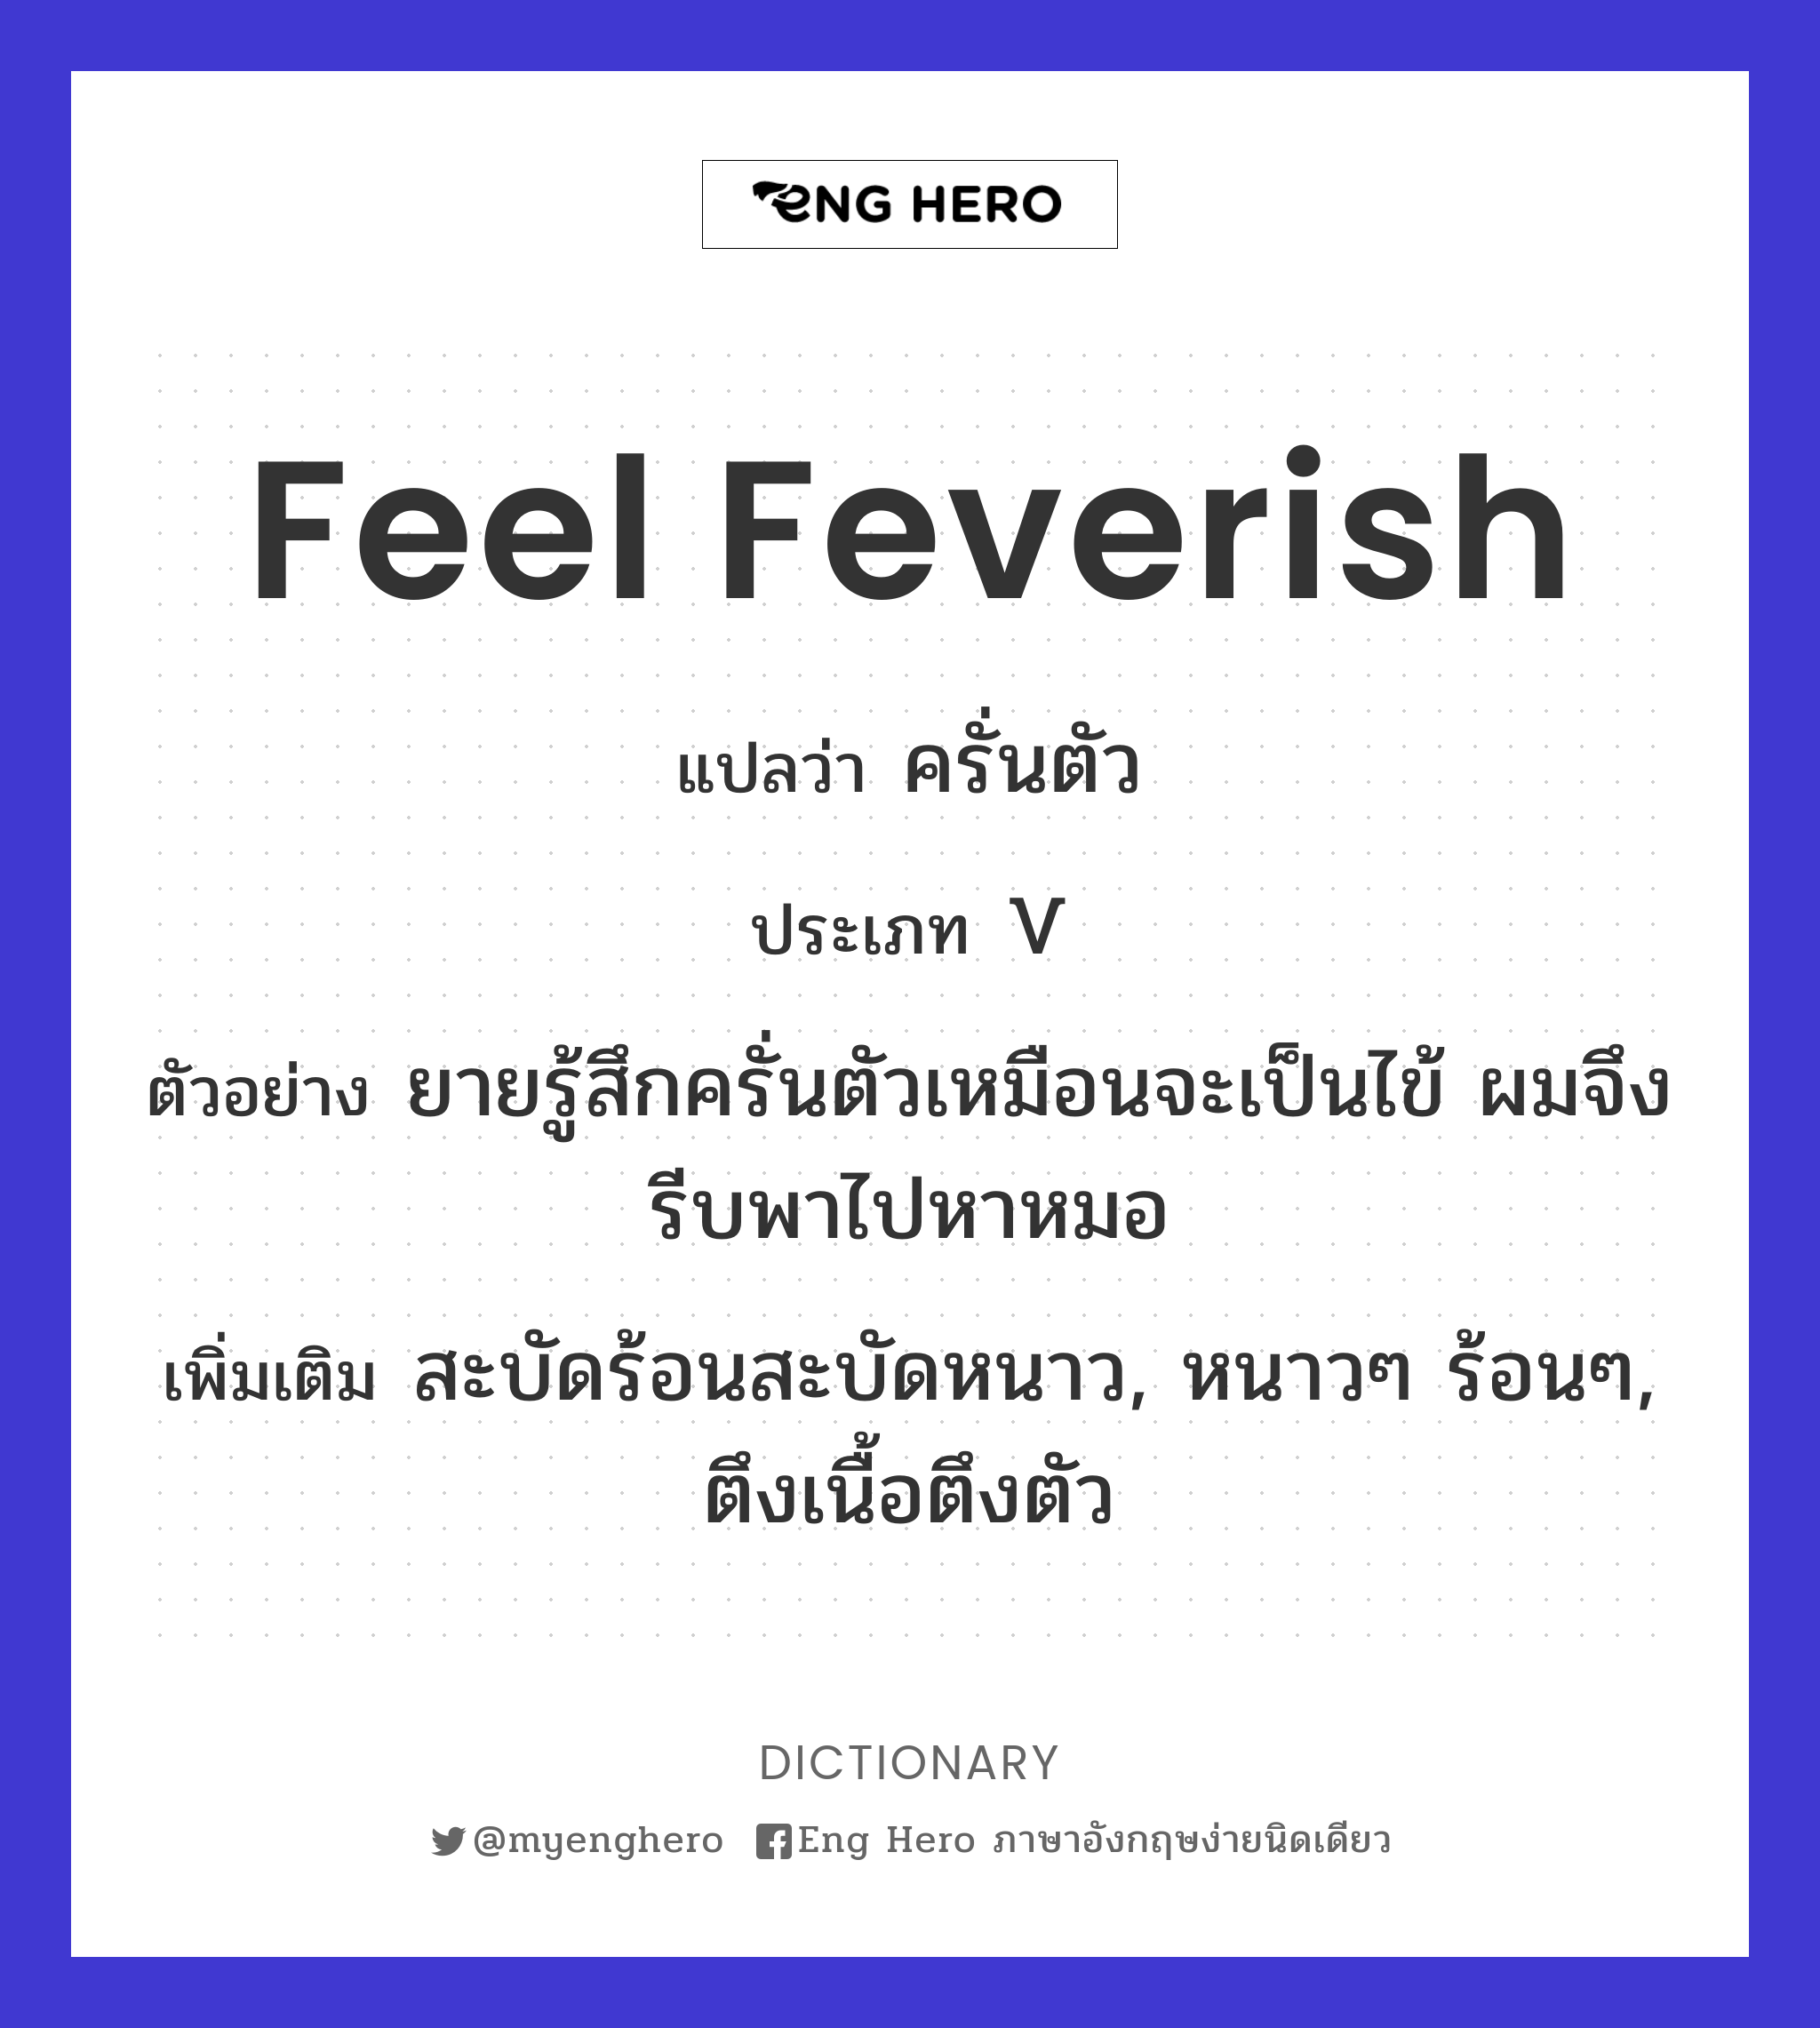 feel feverish